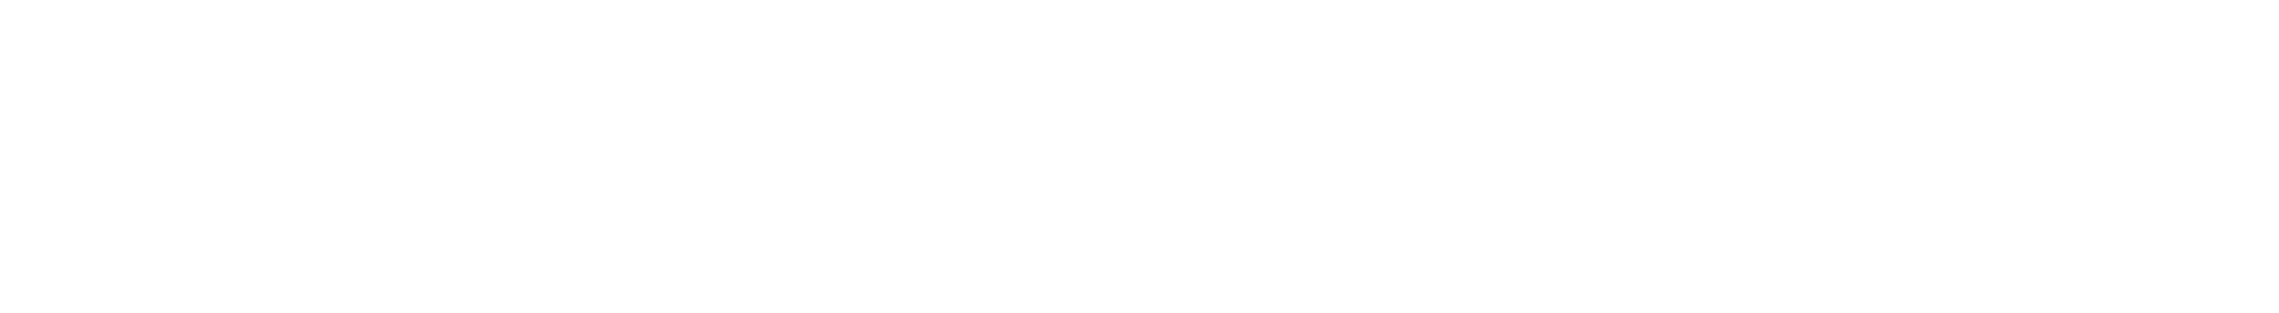 Fox Route